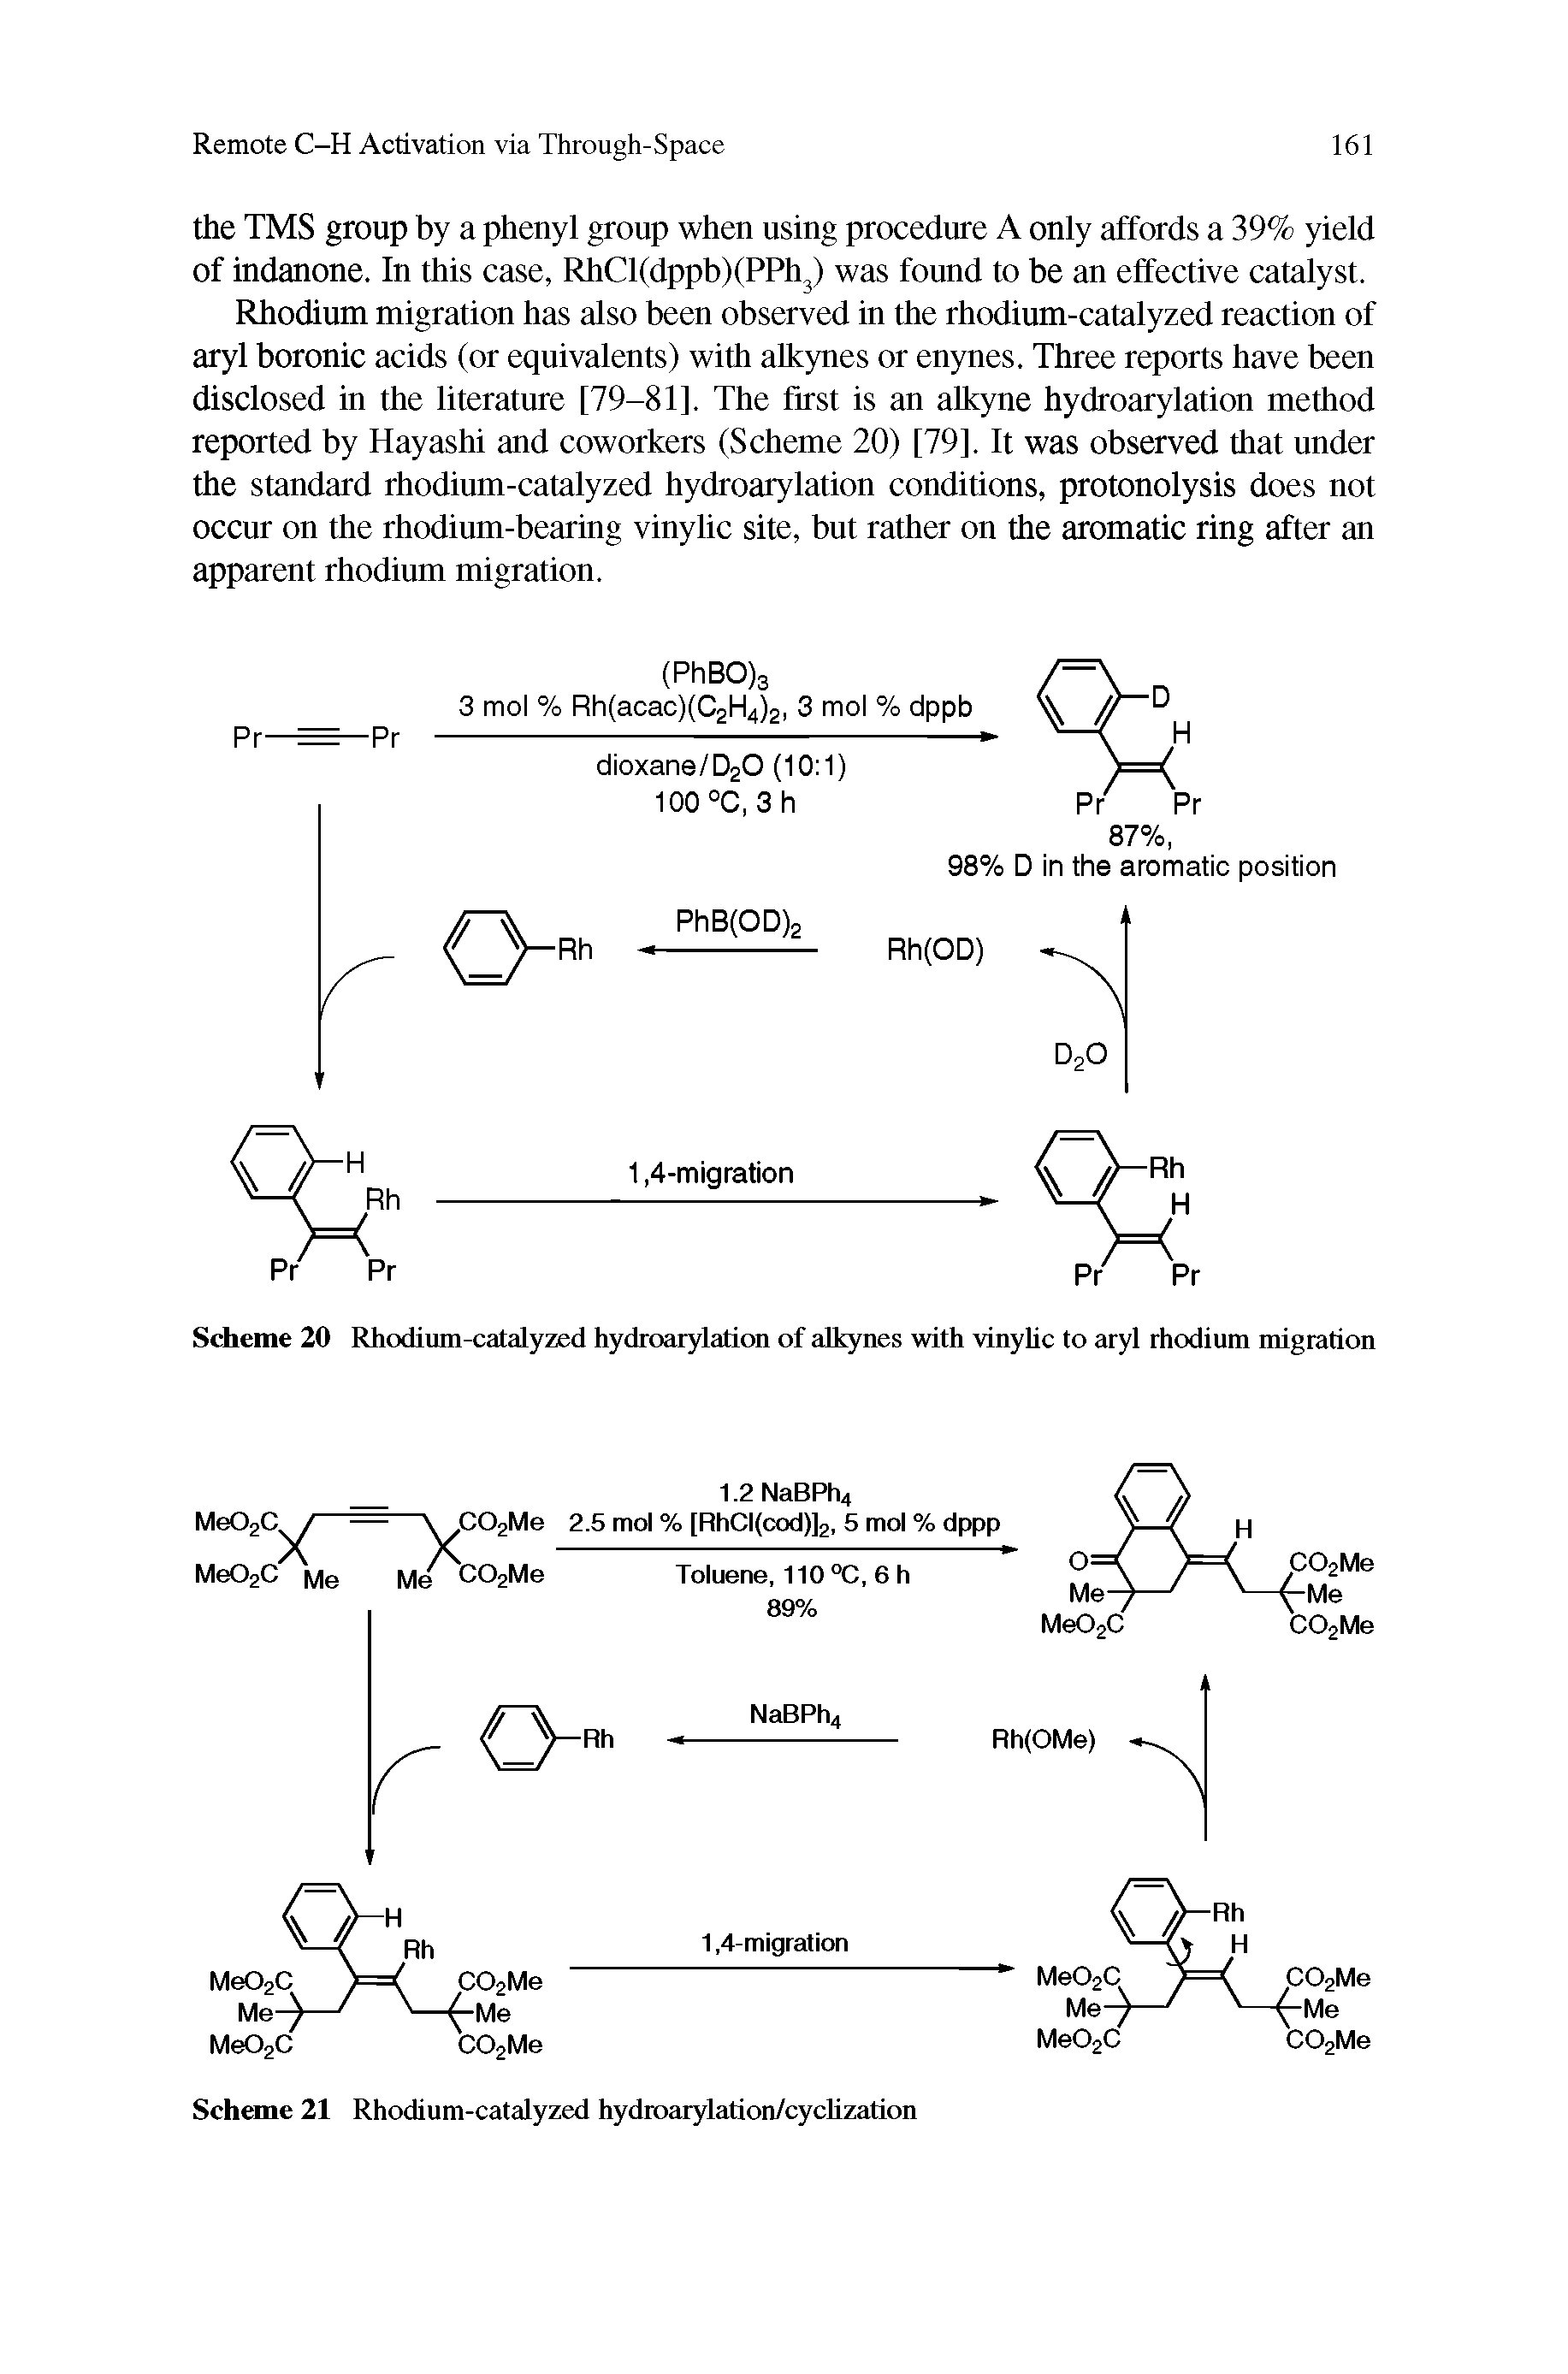 Scheme 20 Rhodium-catalyzed hydroarylation of alkynes with vinylic to aryl rhodium migration...